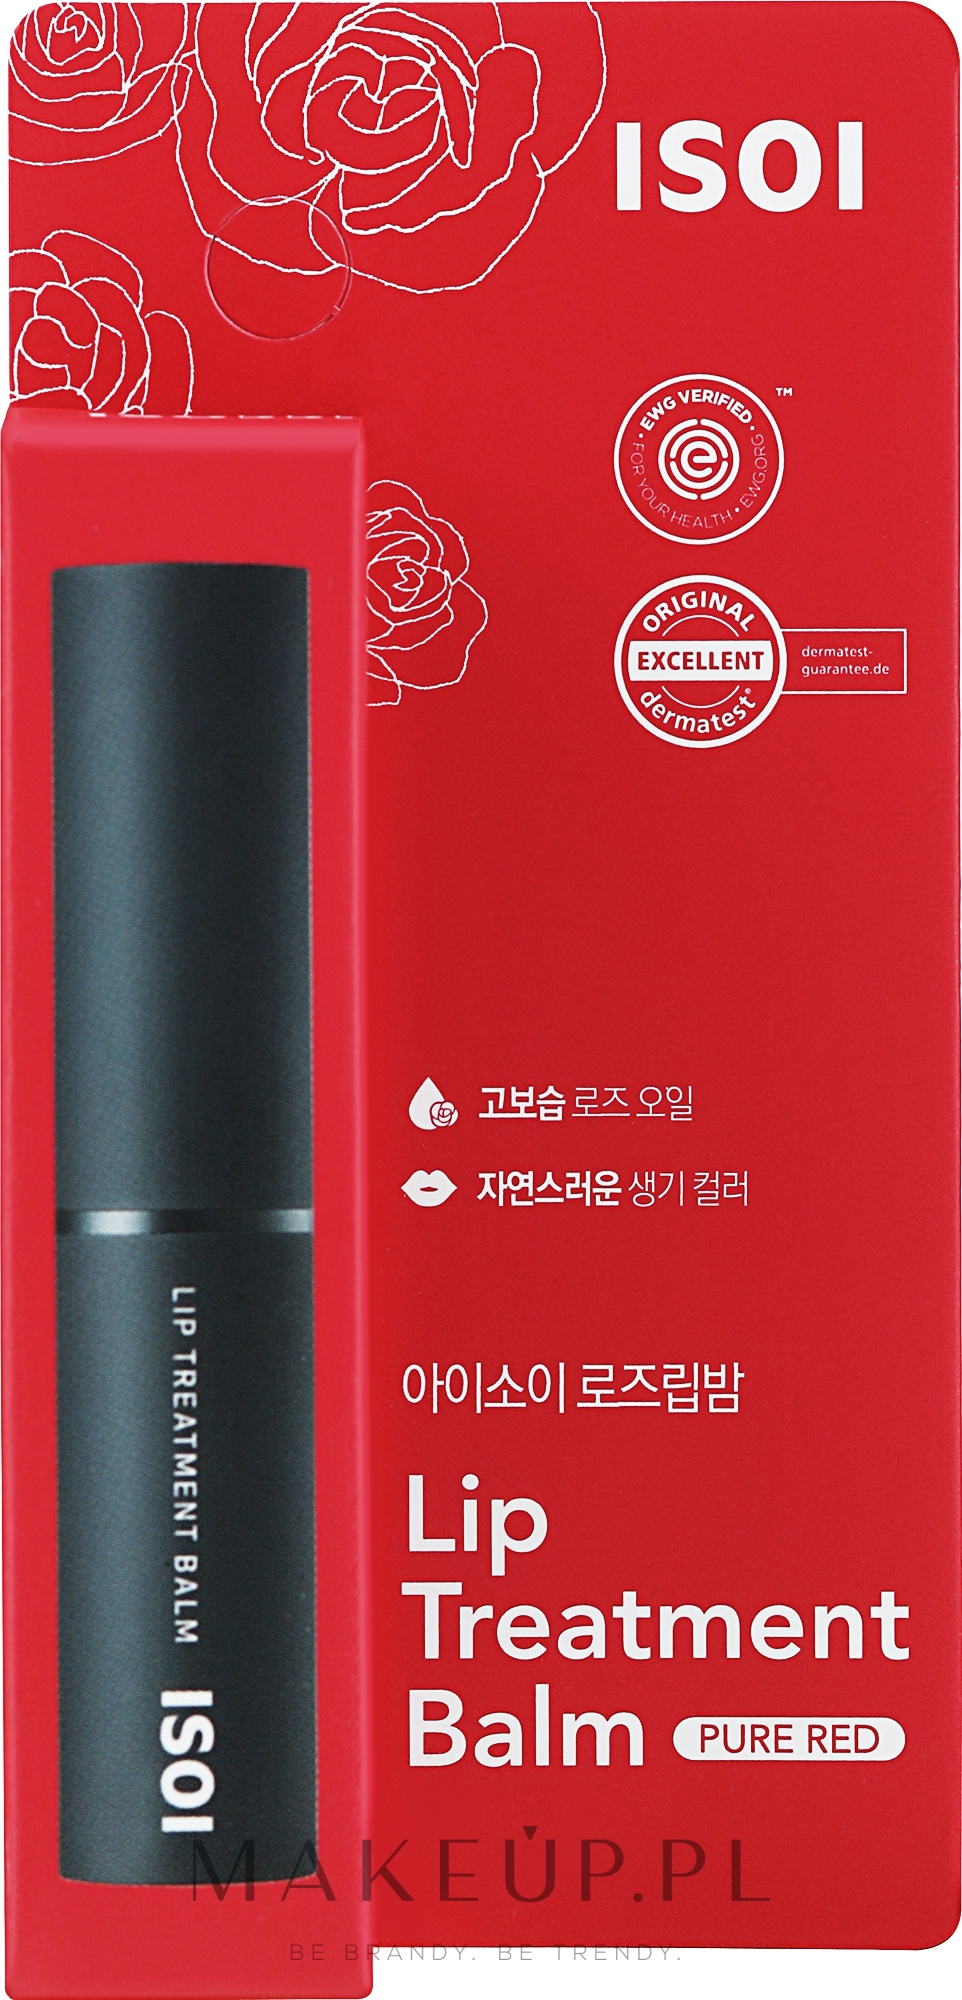 Pomadka do ust - Isoi Bulgarian Rose Lip Treatment Balm Pure Red — Zdjęcie 5 g